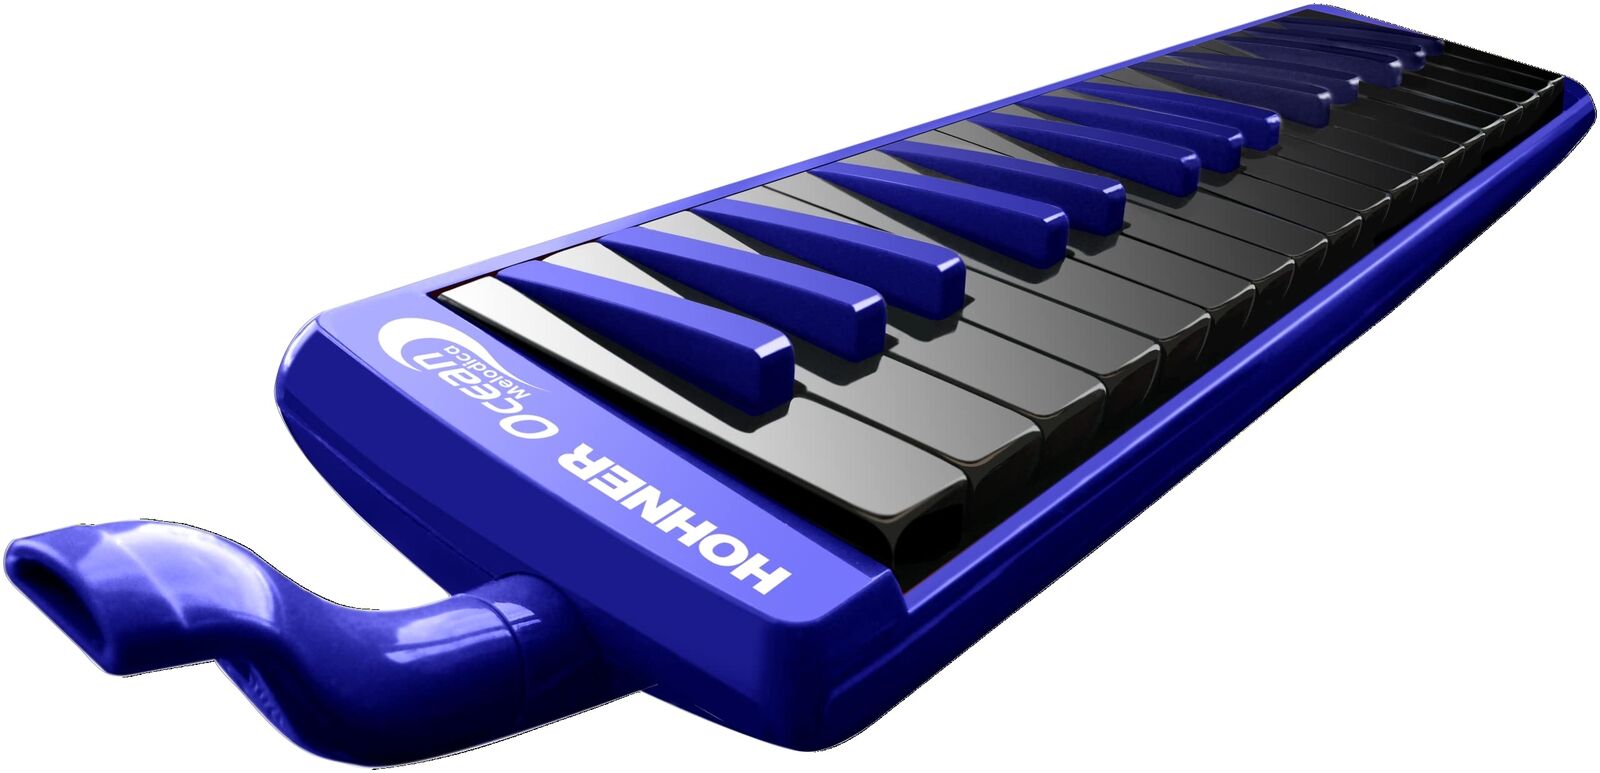 Hohner Horner Keyboard Harmonica Ocean Melodica Ocean32 HOC9432175 Blue Black